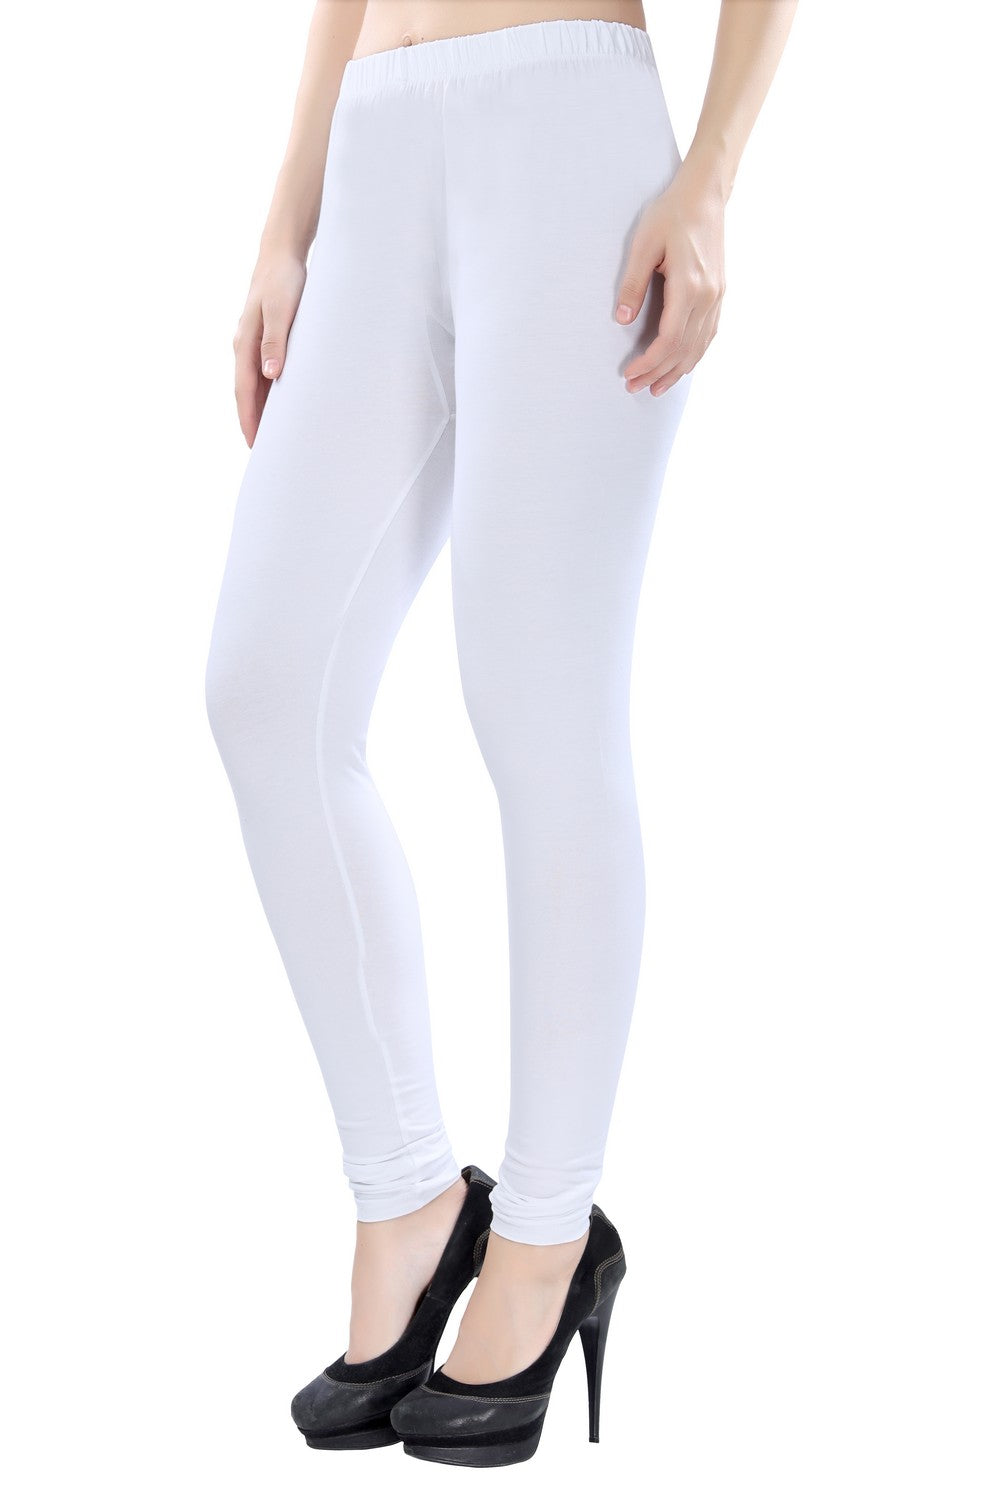 ladyline Extra Long Churidar Leggings Plain Cotton Indian Yoga Workout  Pants for Women, Off-white, Small-X-Large price in UAE,  UAE